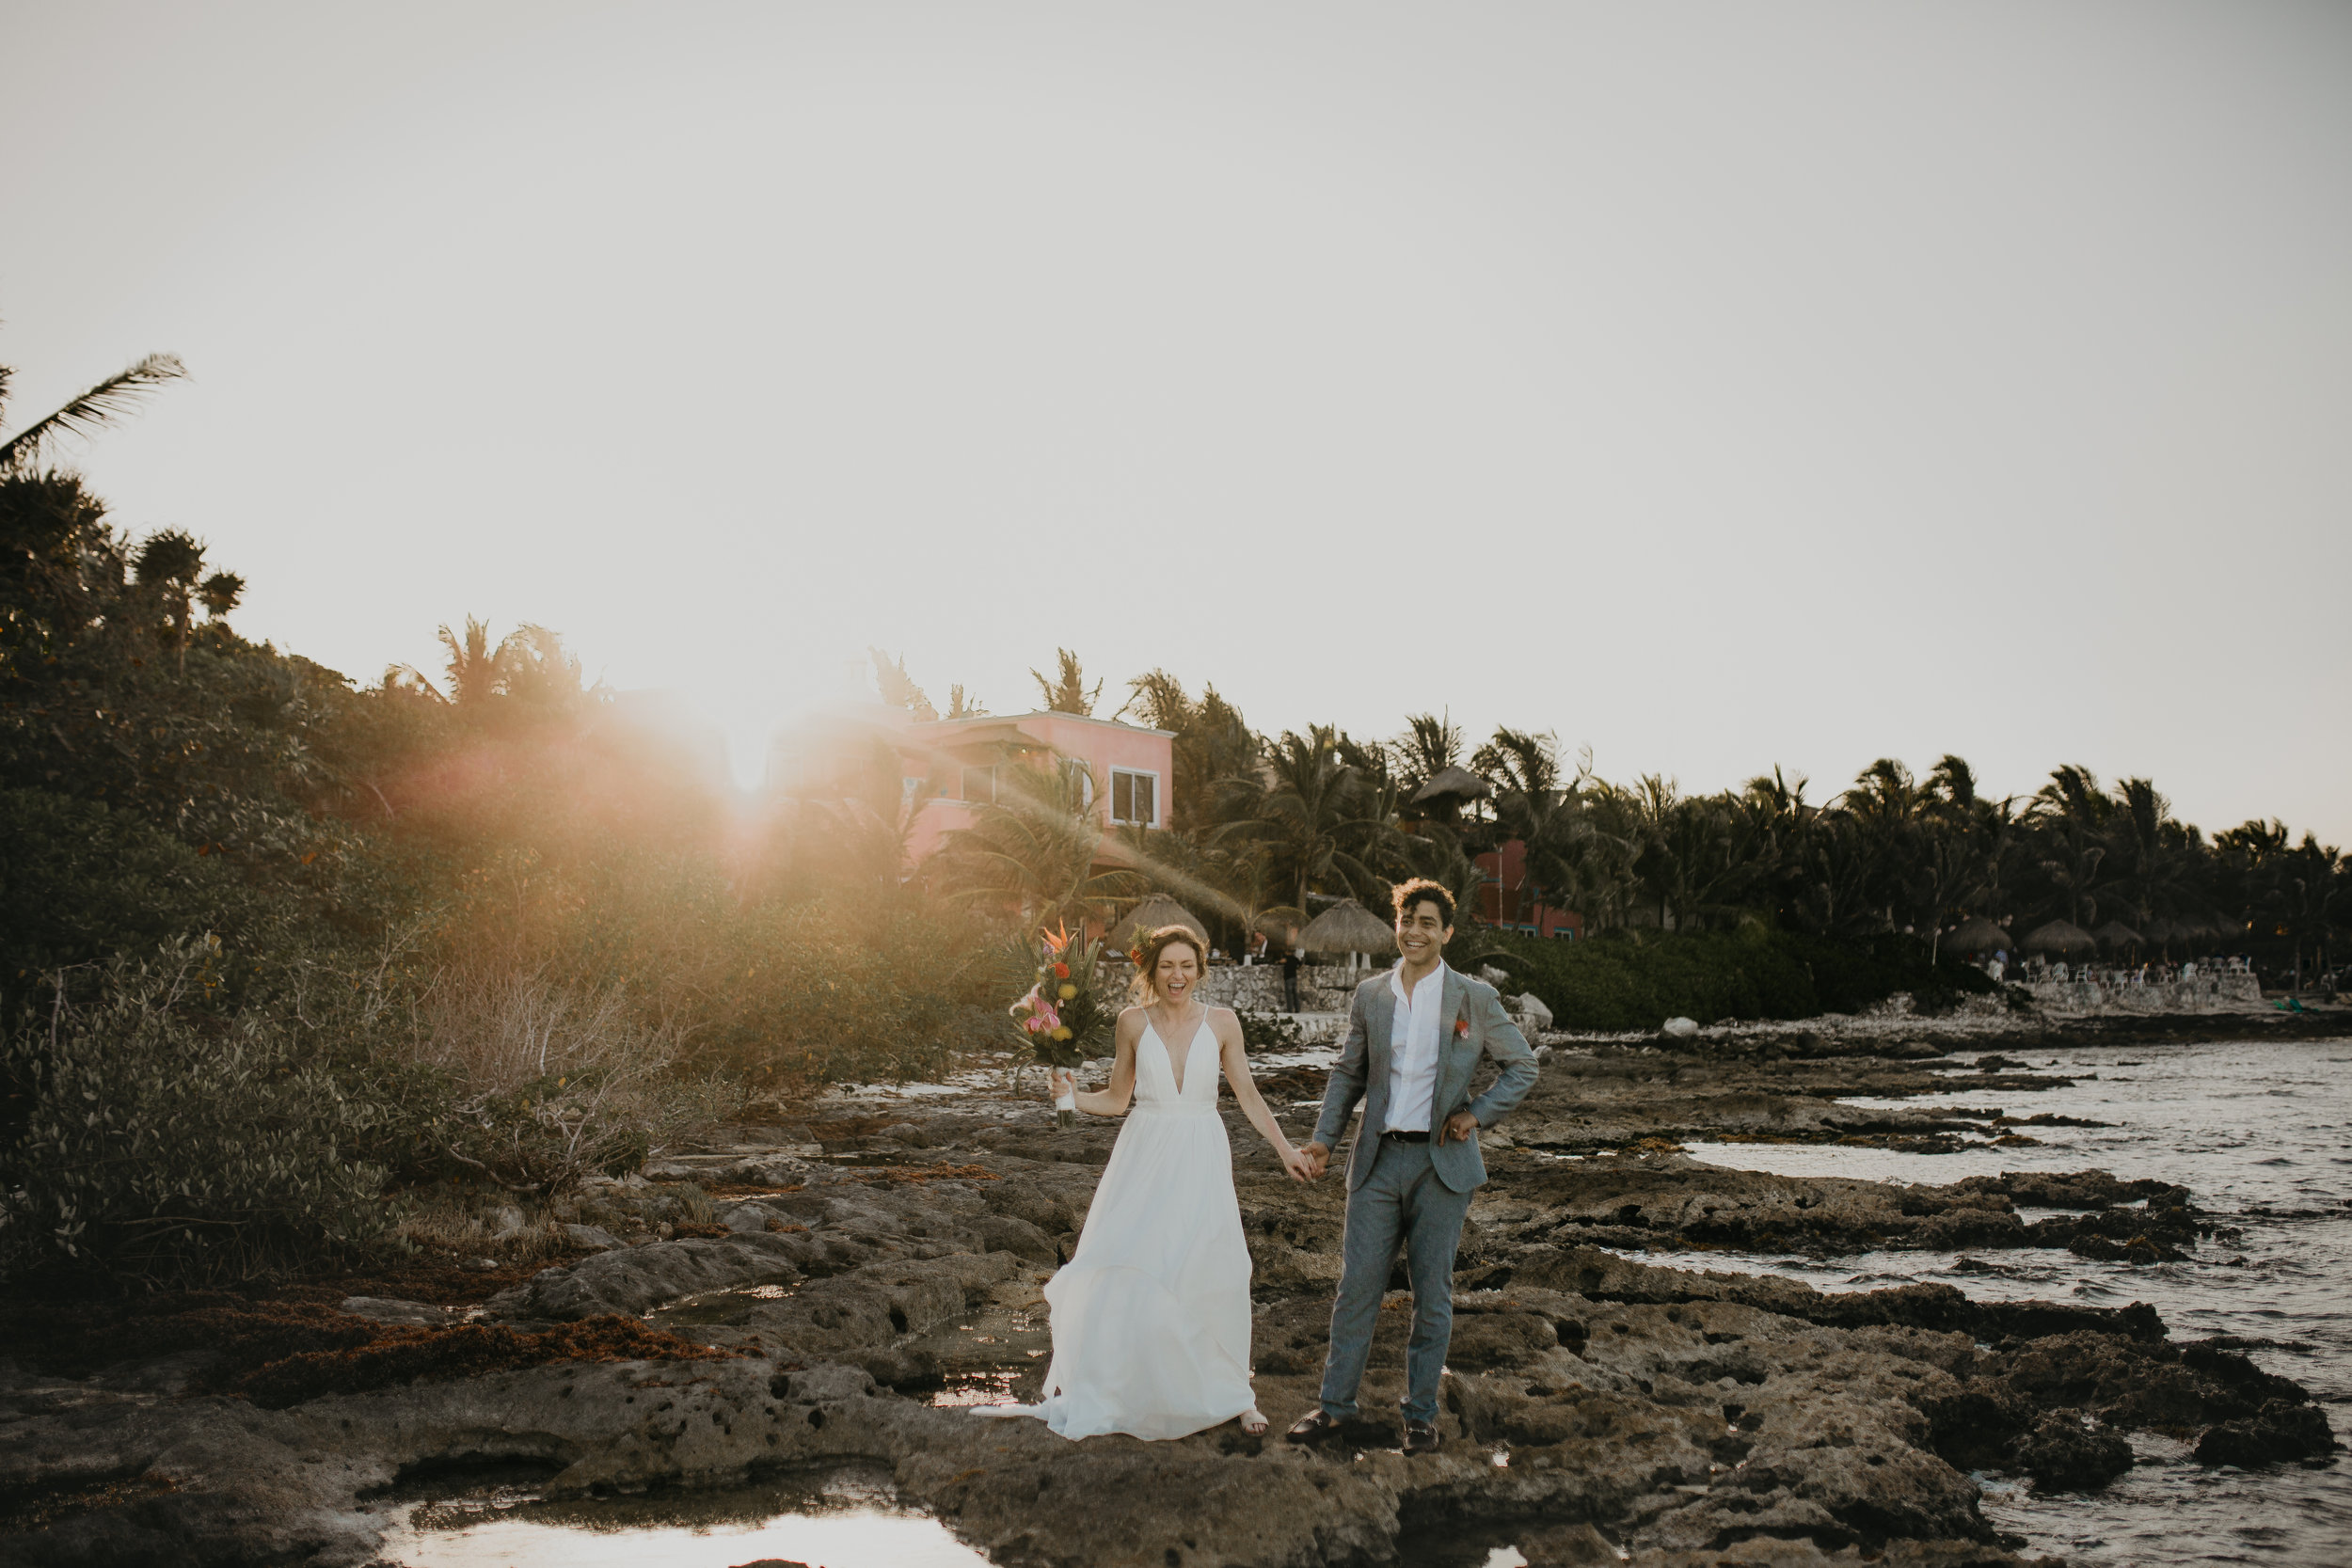 Nicole-Daacke-Photography-beachfront-akumal-destionation-wedding-tulum-mexico-elopement-photographer-destination-wedding-inspiration-sunset-champagne-pop-boho-bride-ocean-tropical-bohemian-tulum-wedding-photos-187.jpg